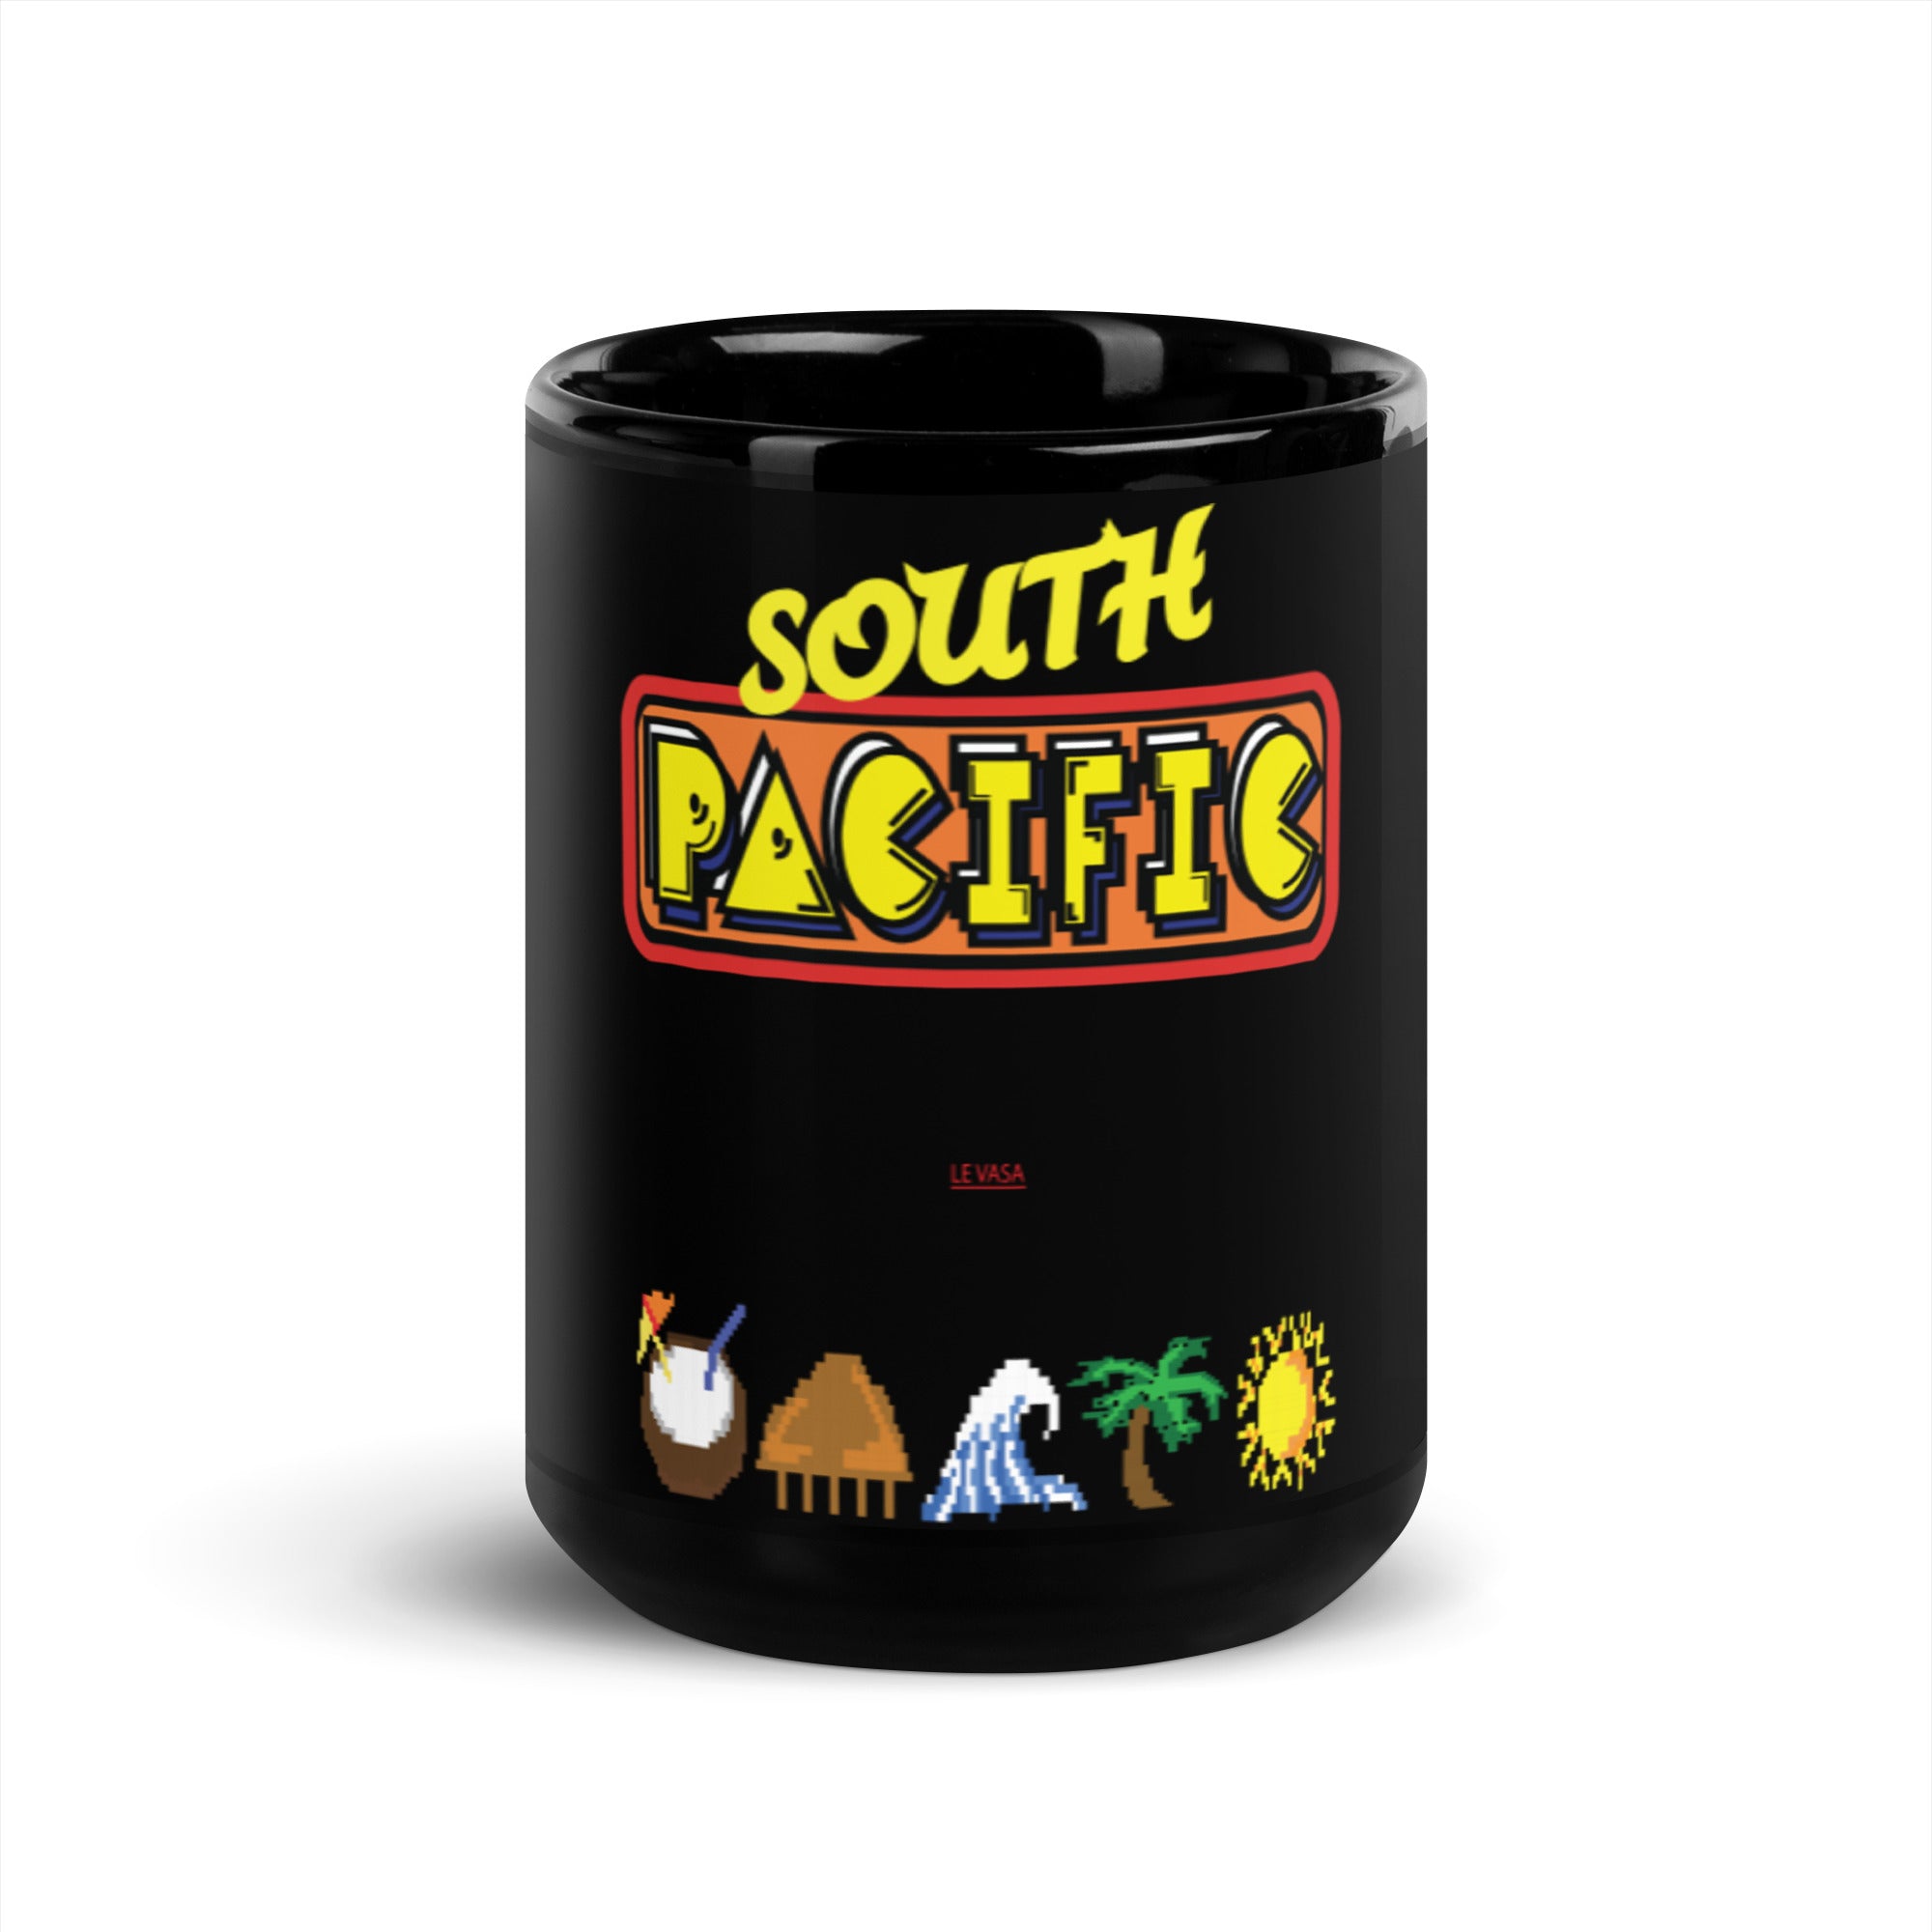 8 Bit South Pacific Mug